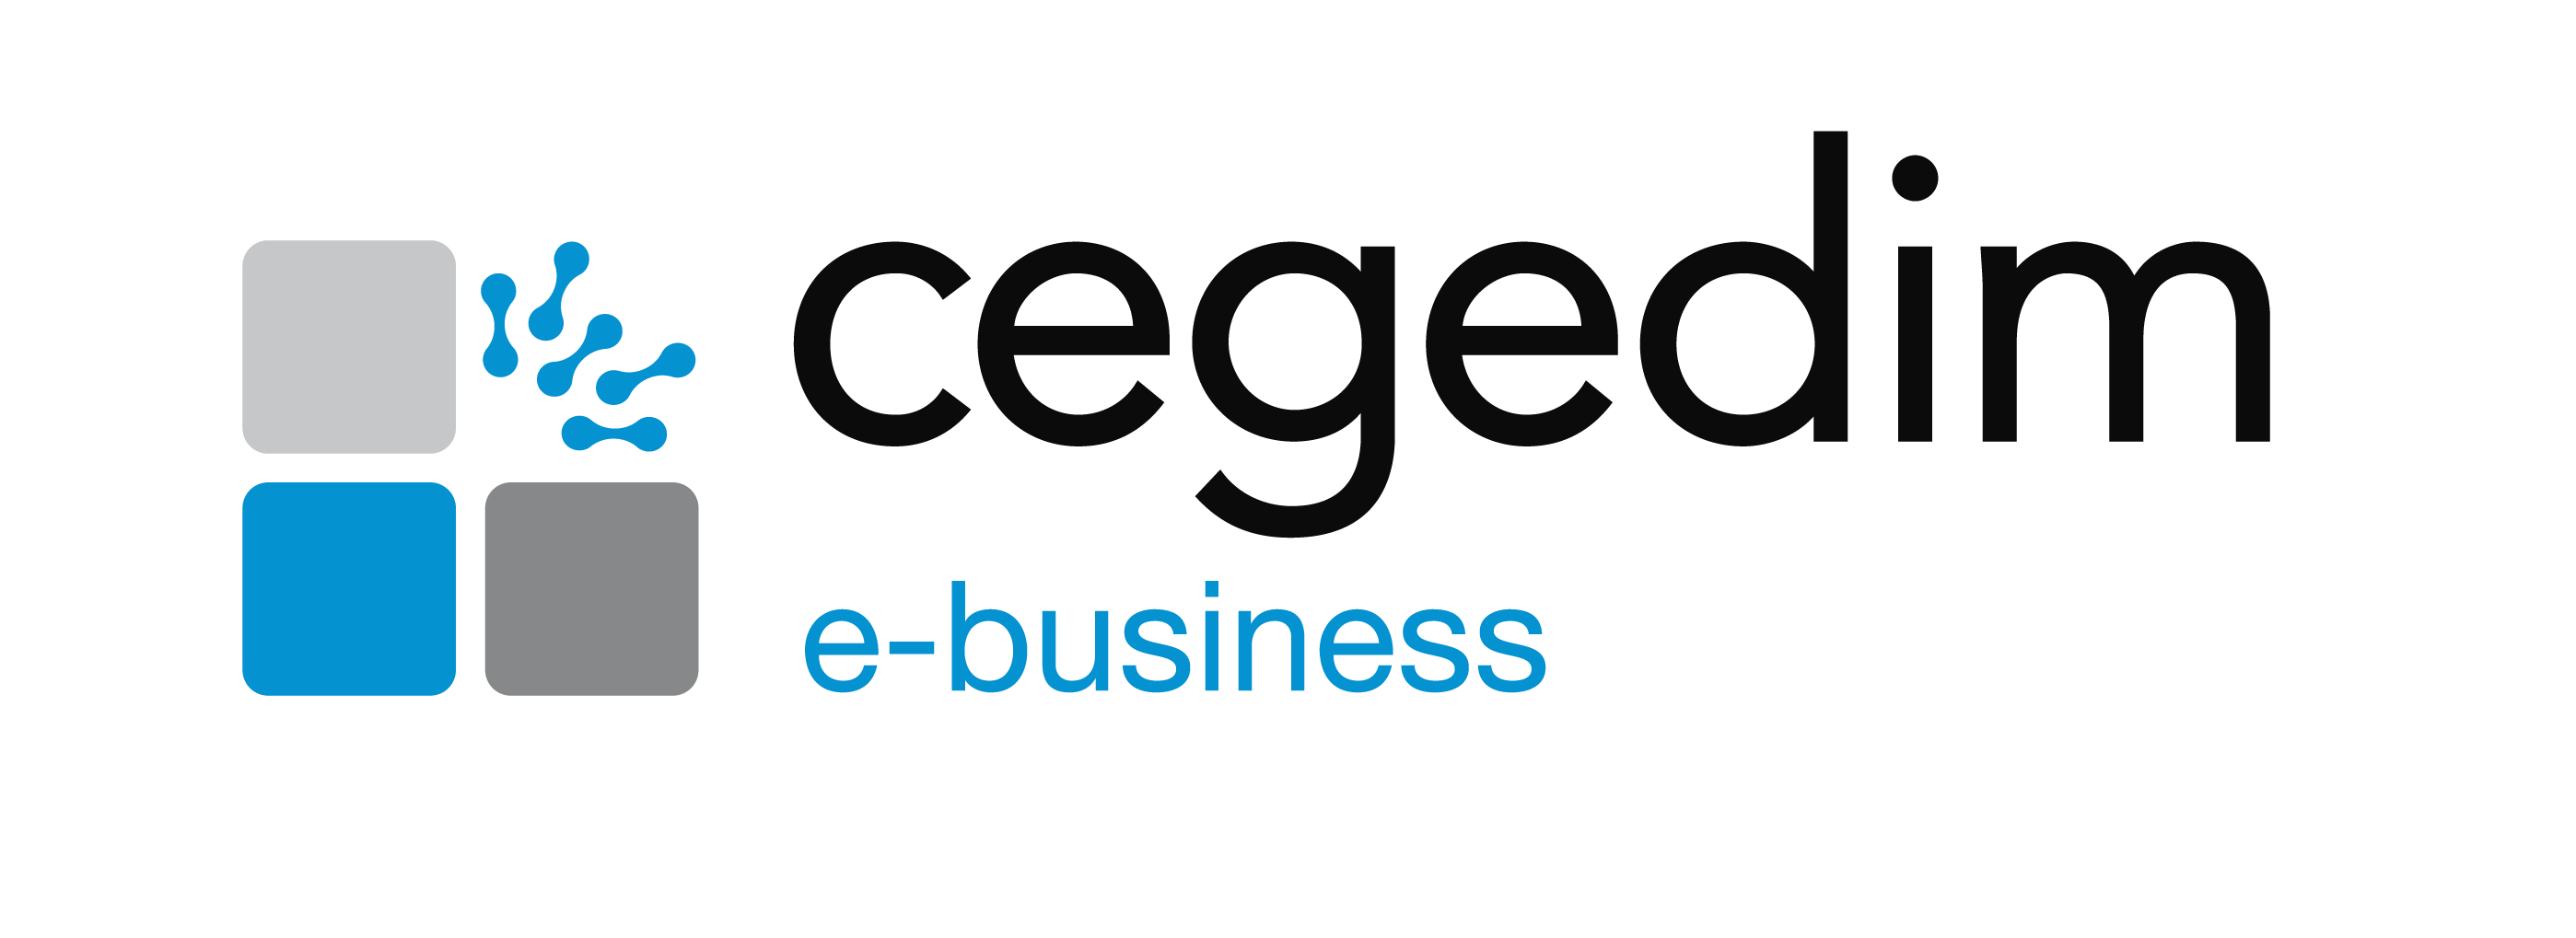 Cegedim_e-Business_RGB